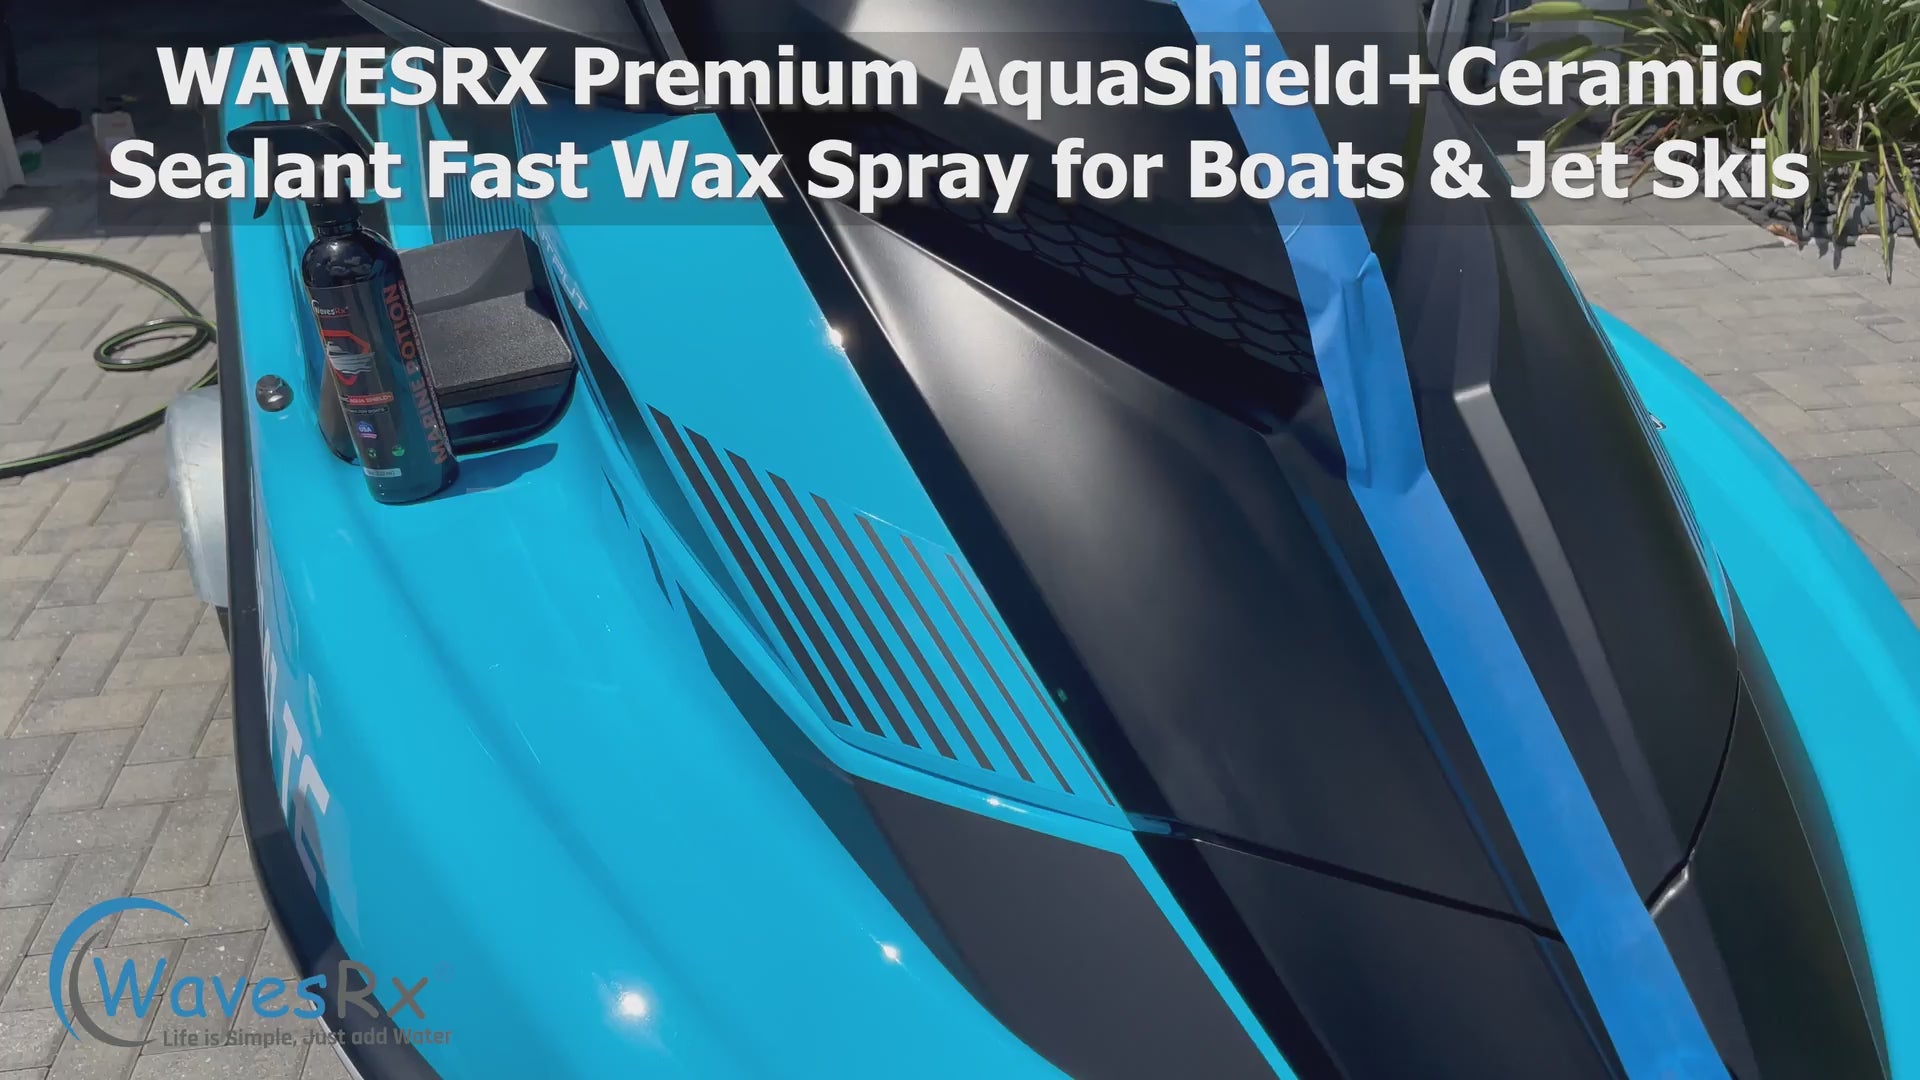  WavesRx High-Performance Ceramic Spray Coating for Boats & Jet  Skis (AquaShield+), Marine Grade SiO2 Sealant Protects from Salt,  Contaminants & UV Damage